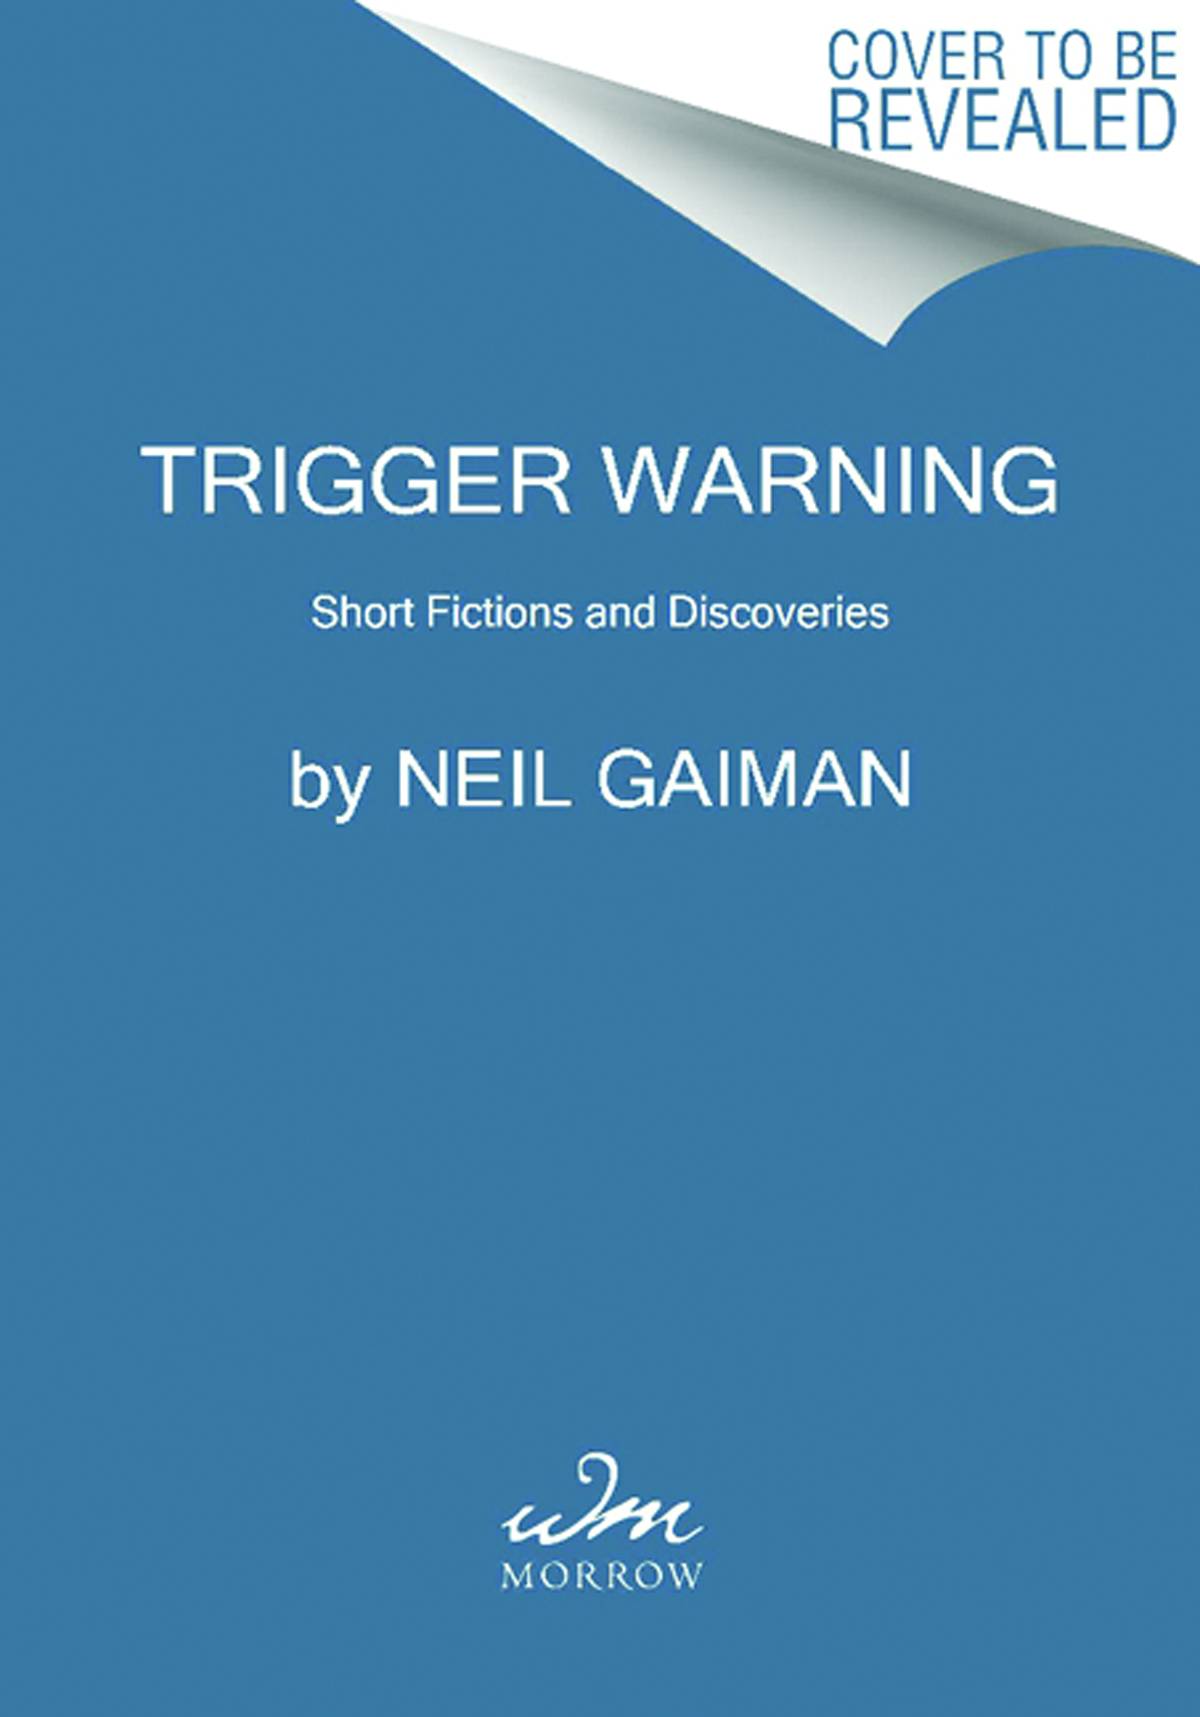 Neil Gaiman Trigger Warning Short Fictions & Disturbances